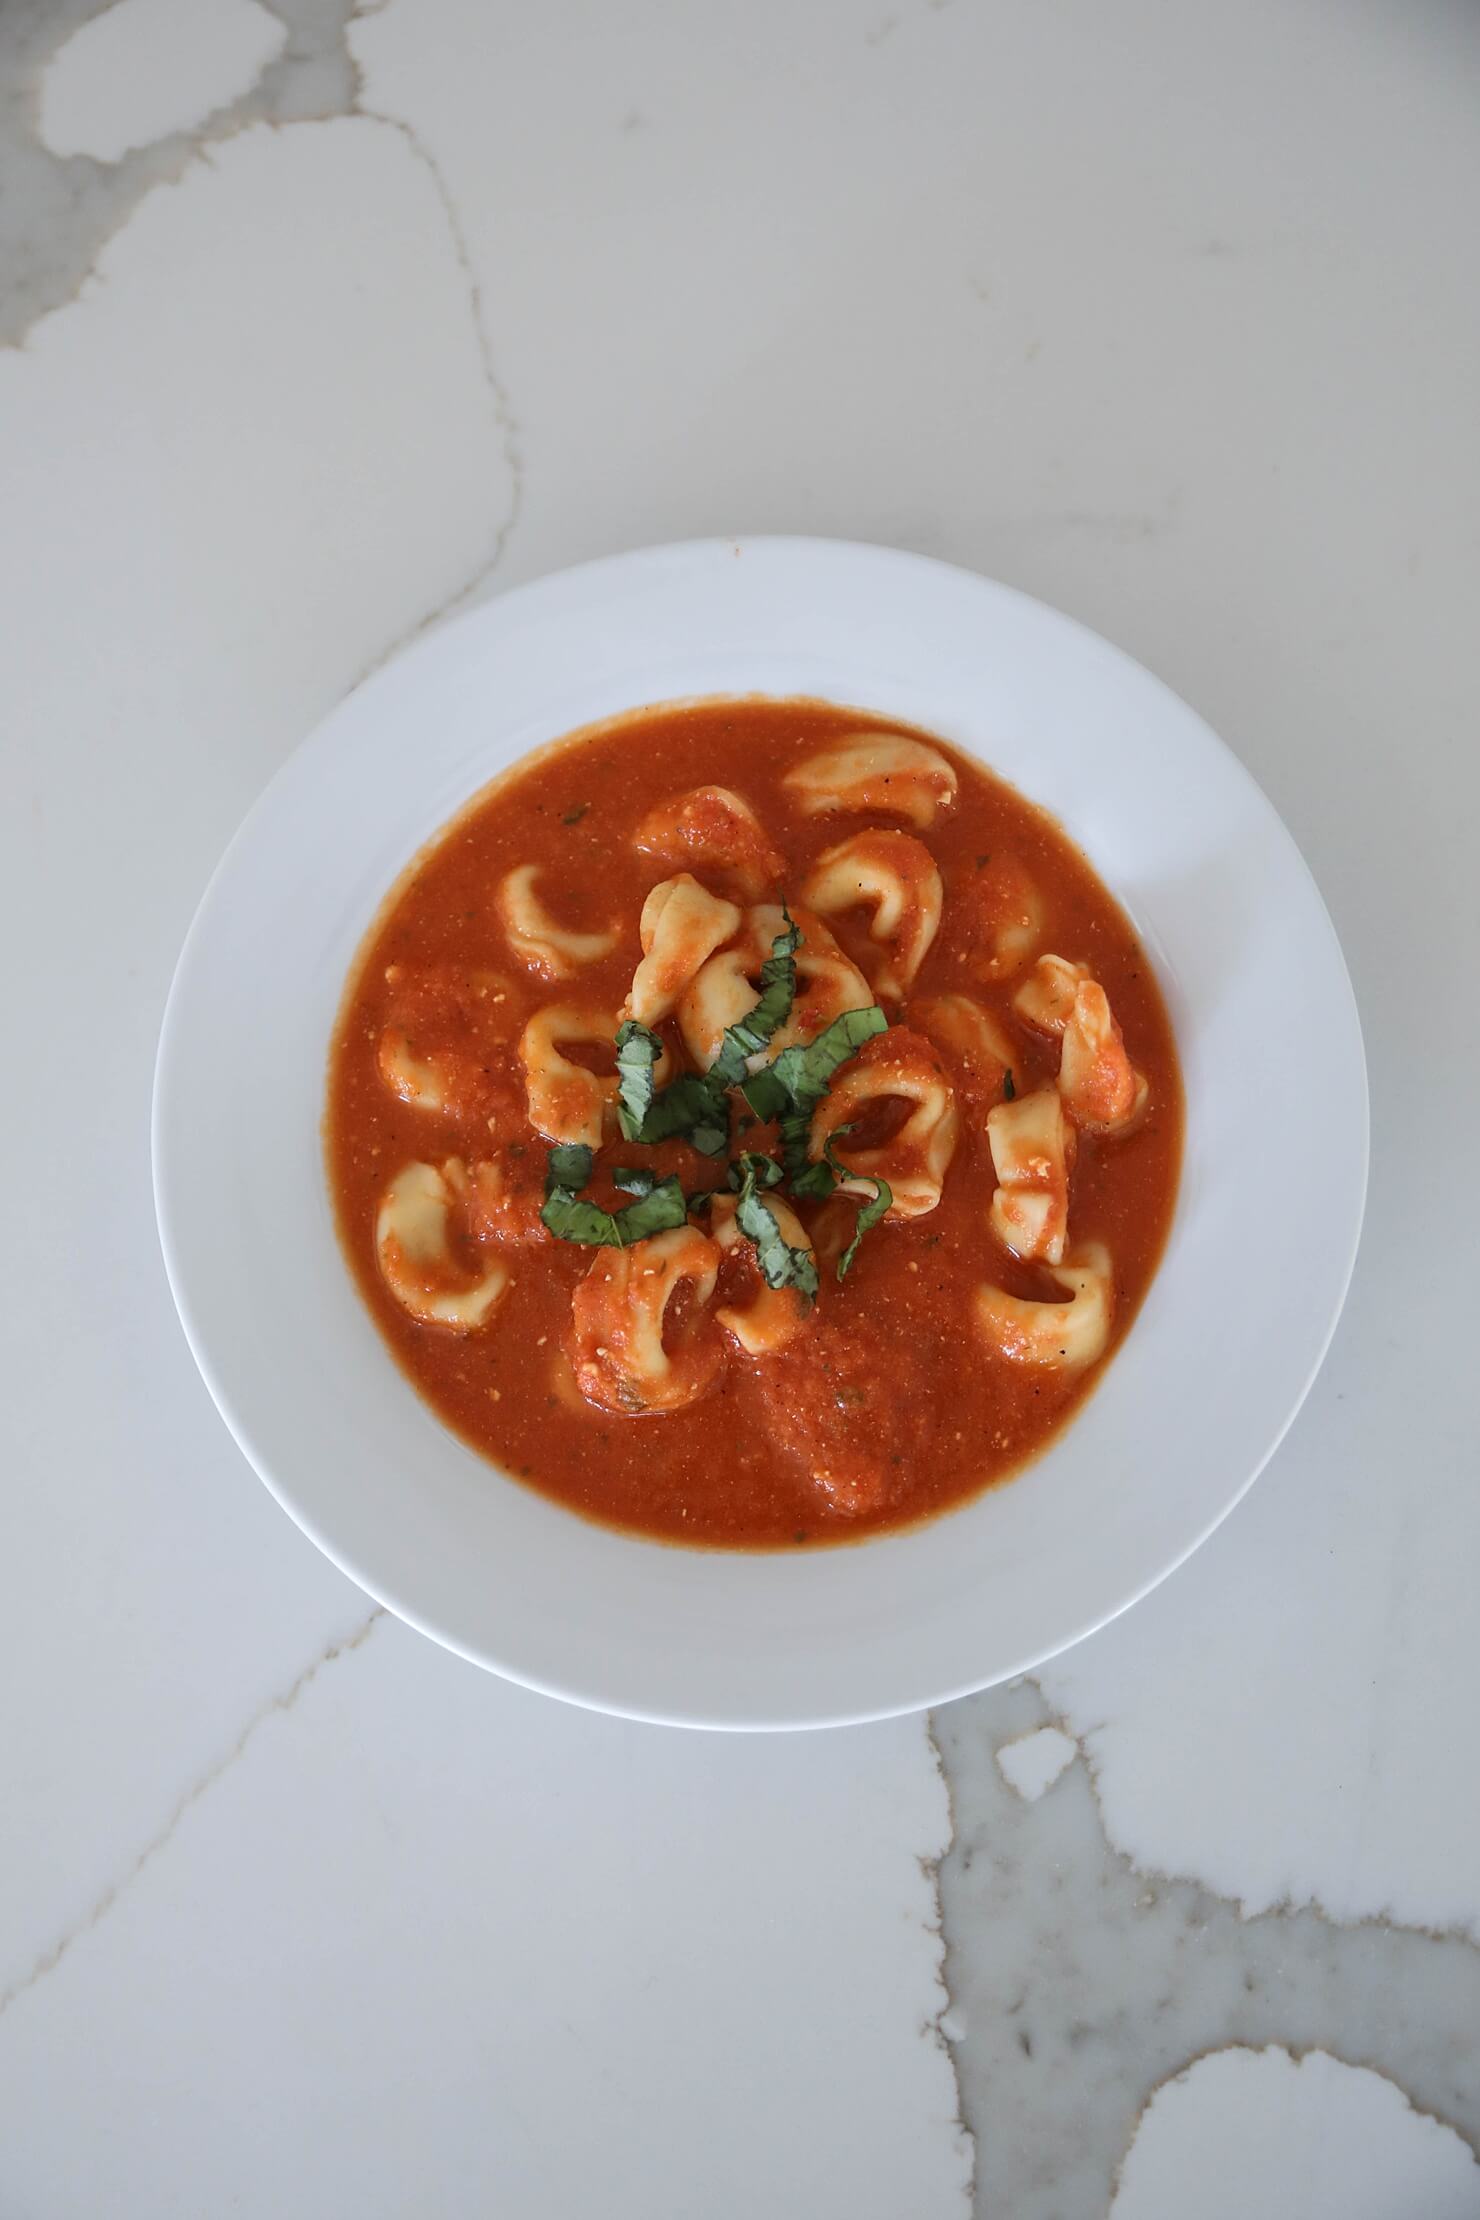 cozy night recipes, featuring tortellini soup